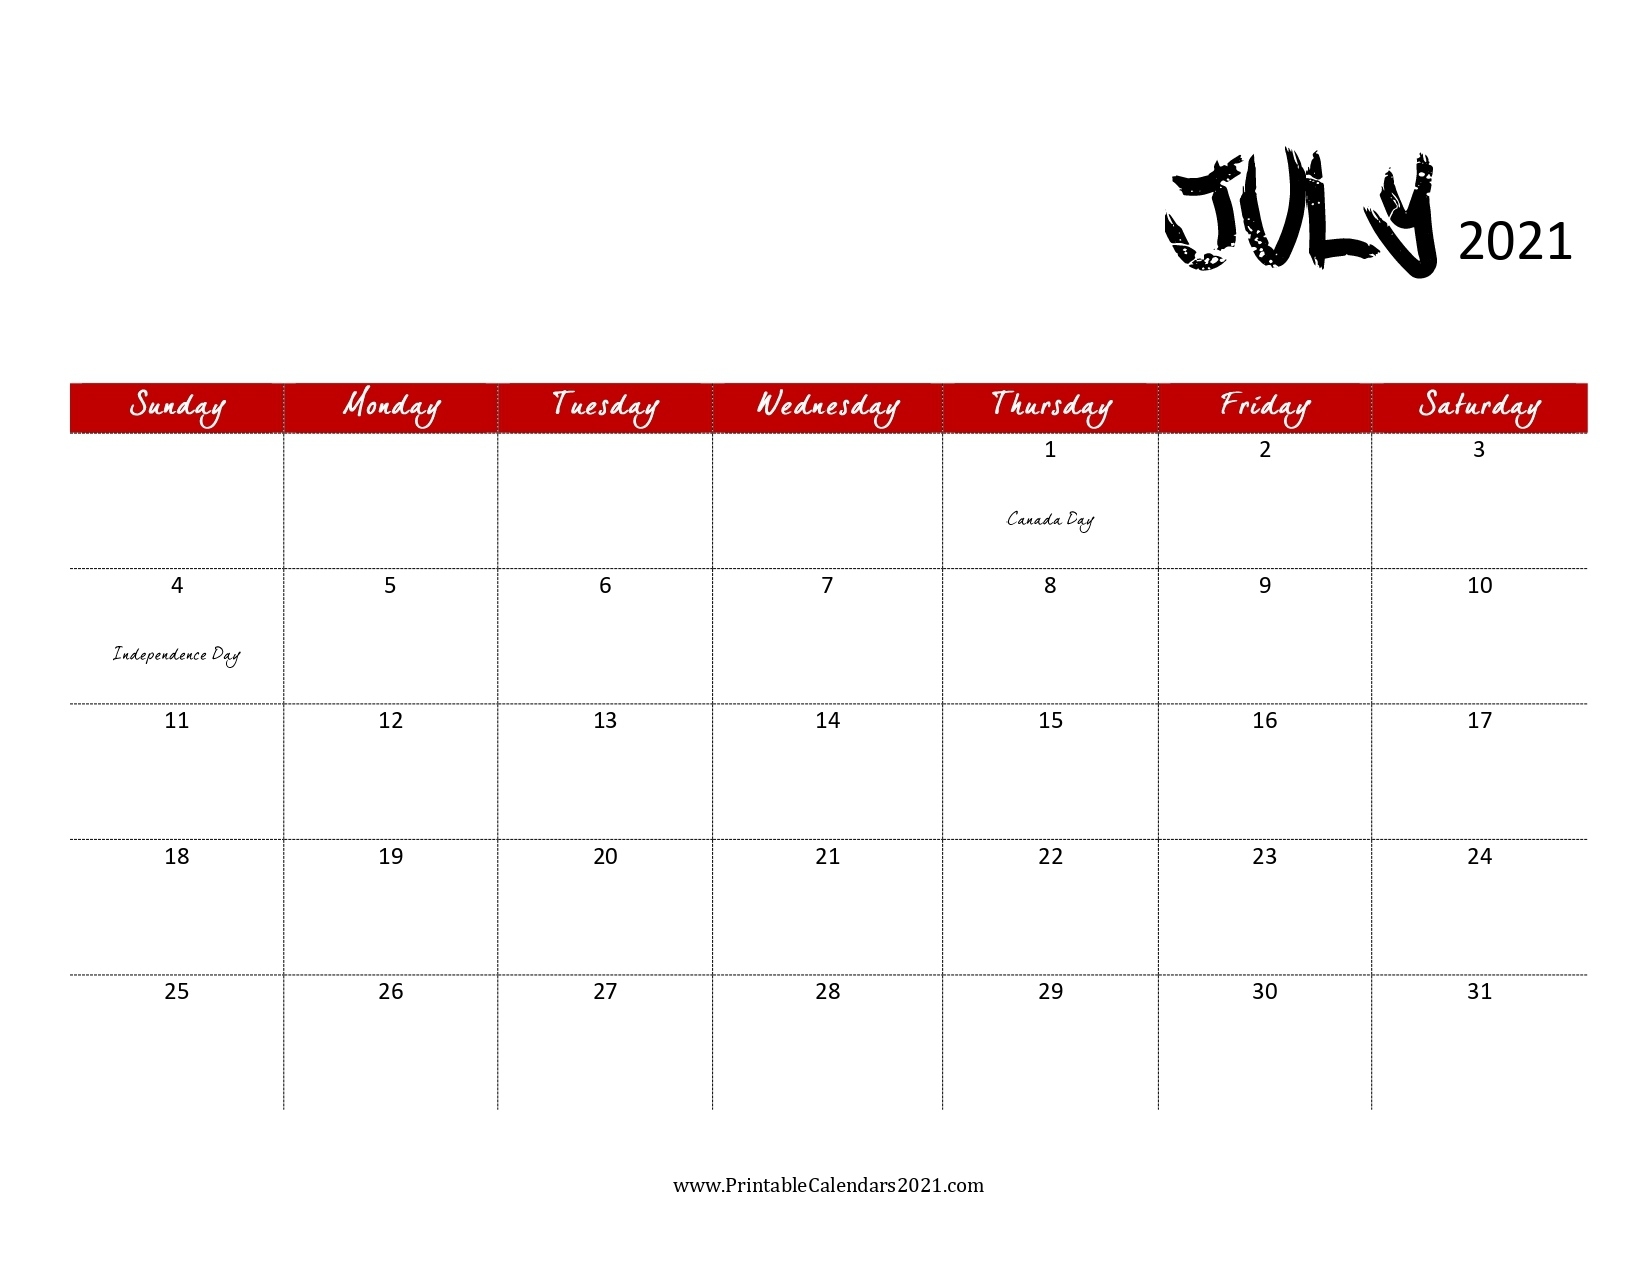 45+ July 2021 Calendar Printable, July 2021 Calendar Pdf, Blank, Free Blank July 2021 Calendar Printable